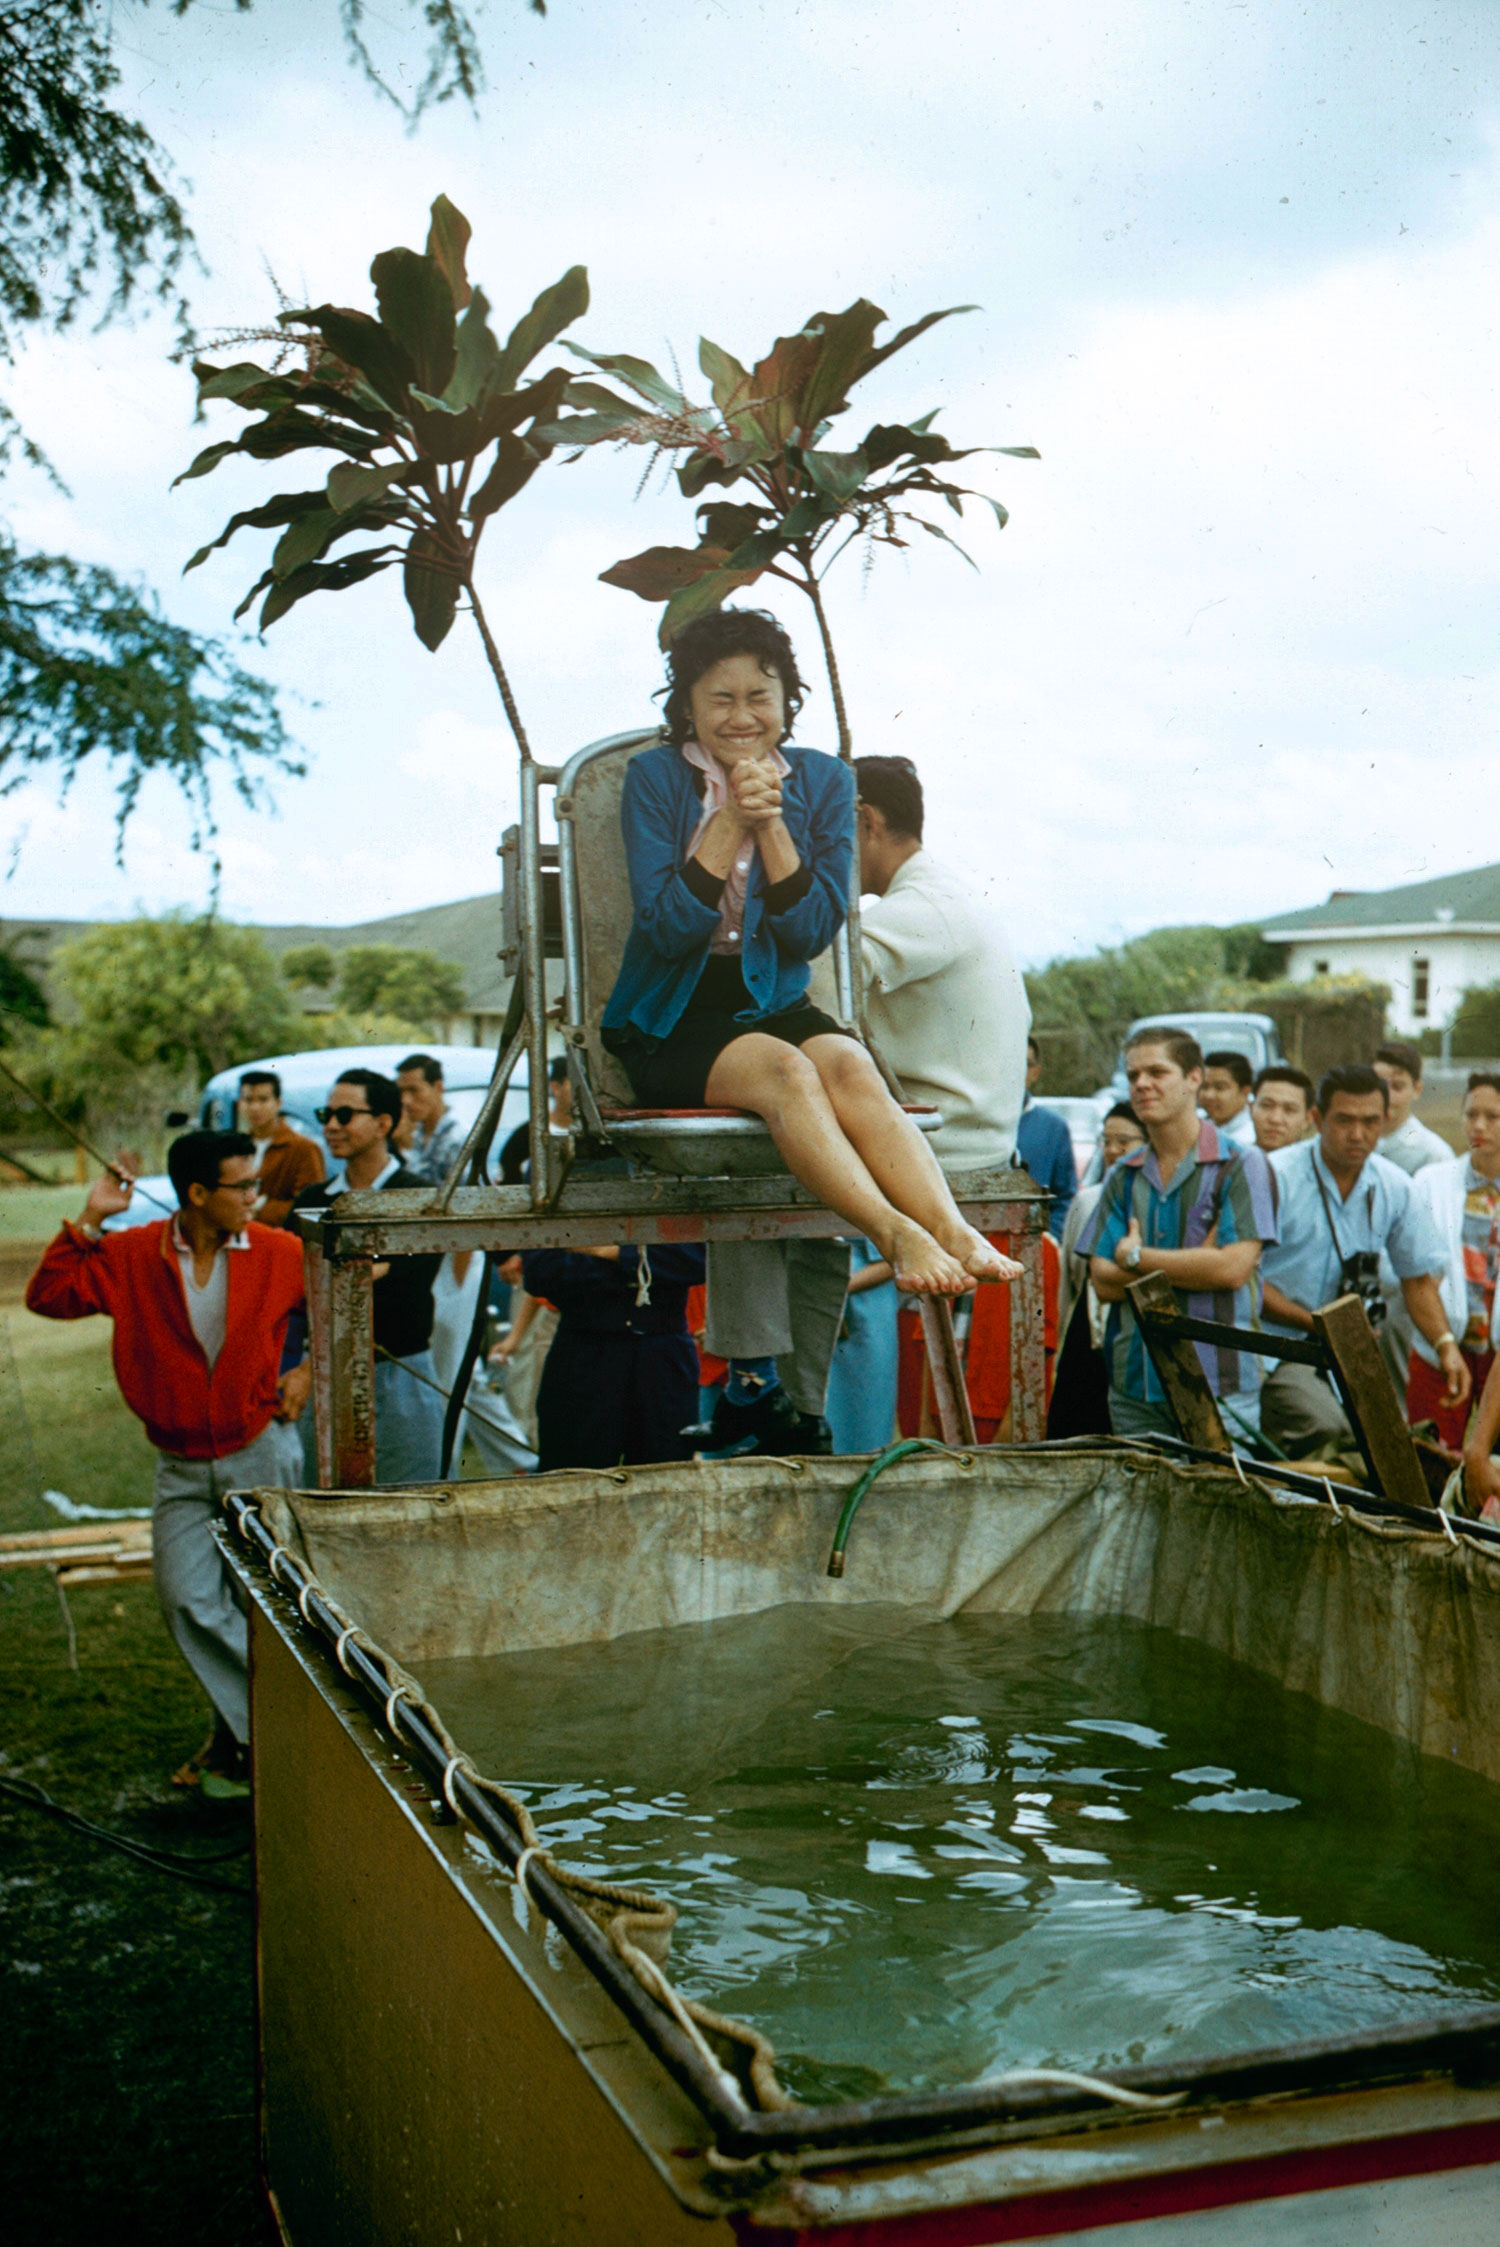 Dunking pool at a Hawaii fair, 1959.